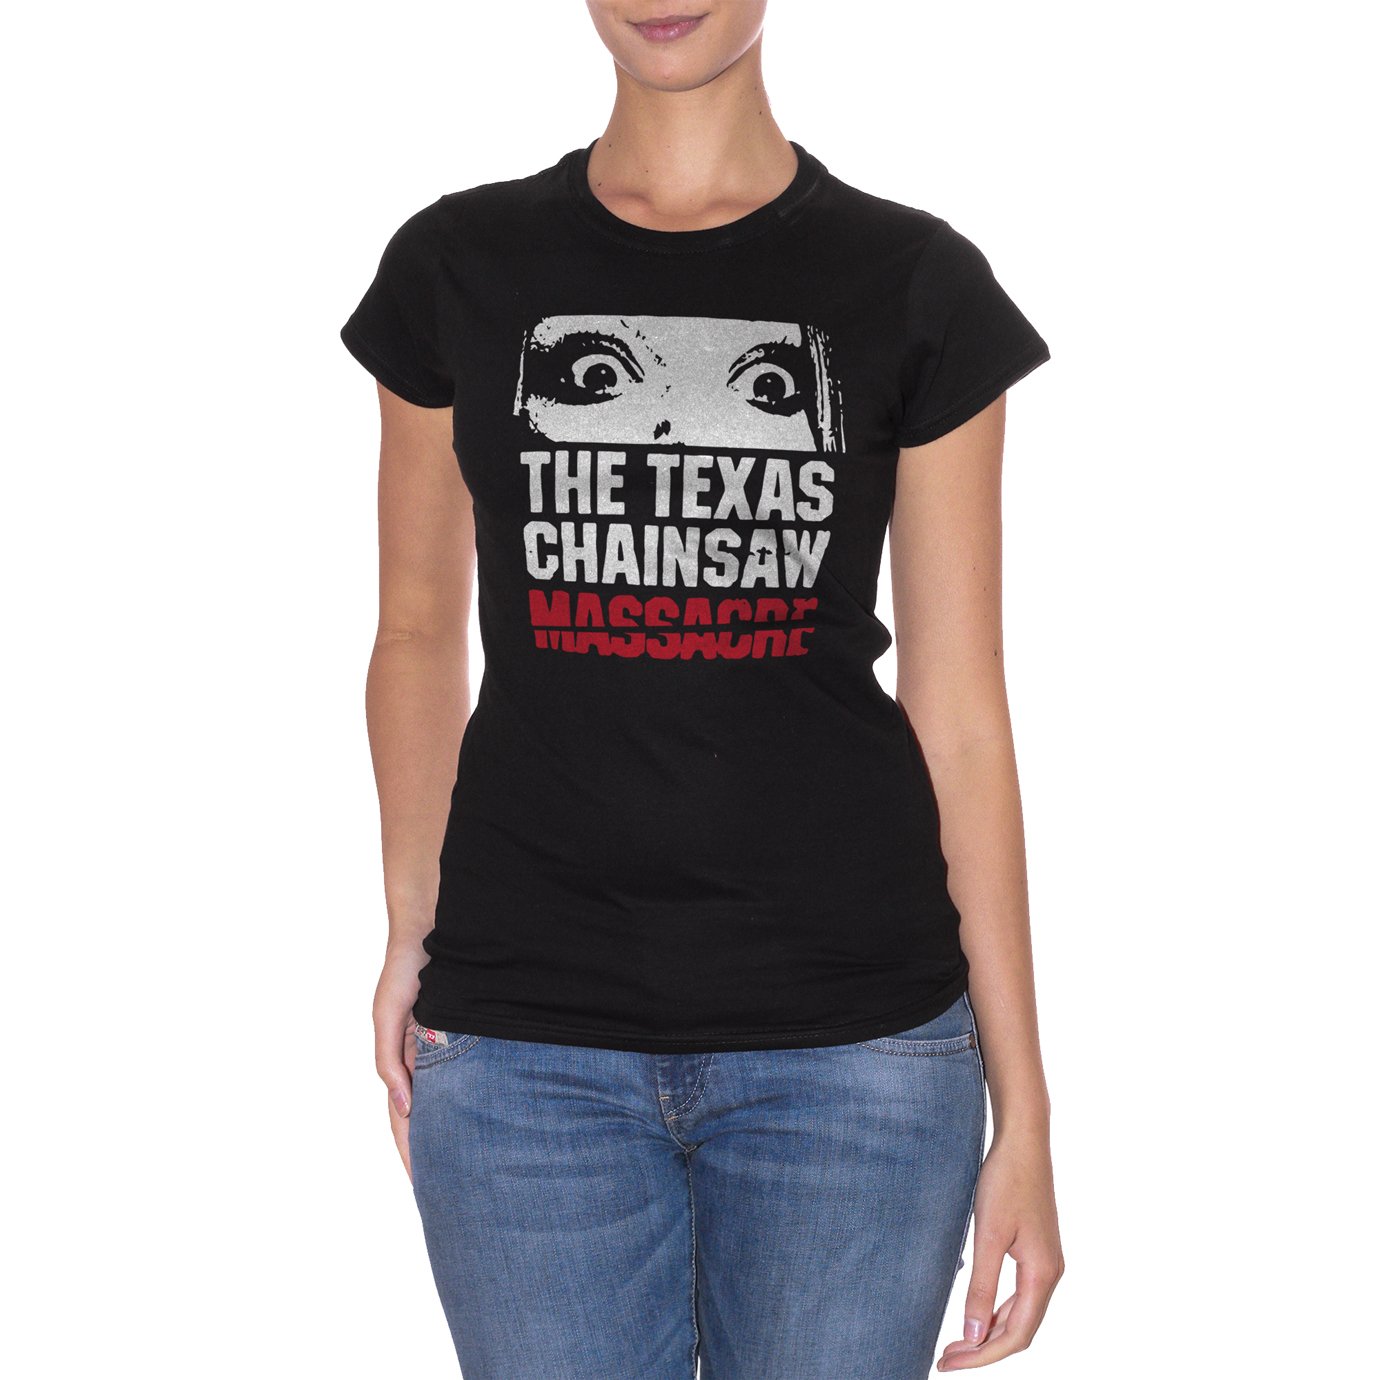 Black T-Shirt Non aprite Quella Porta - Texas Chainsaw Massacre - Film Horror Cult Anni 70 - Movie - Choose ur Color Cuc shop